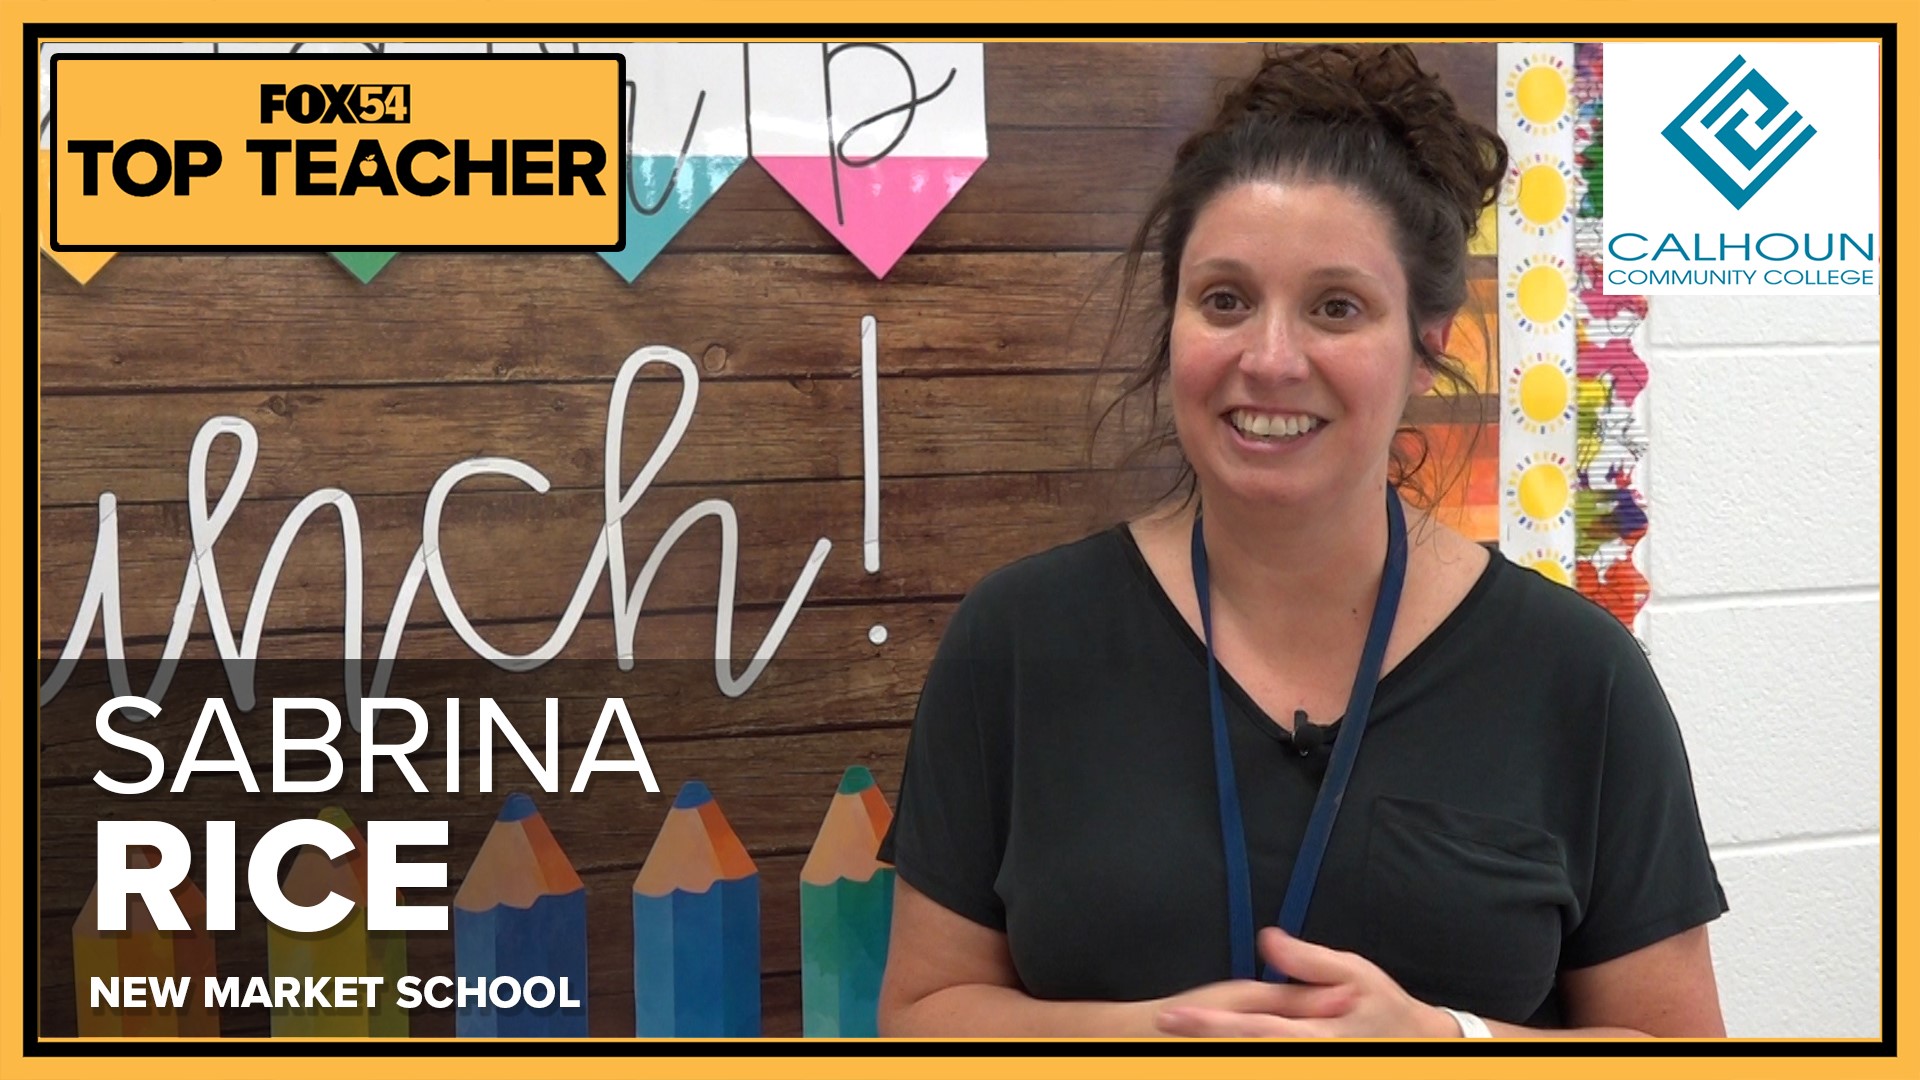 Sabrina Rice teaches first graders at New Market School